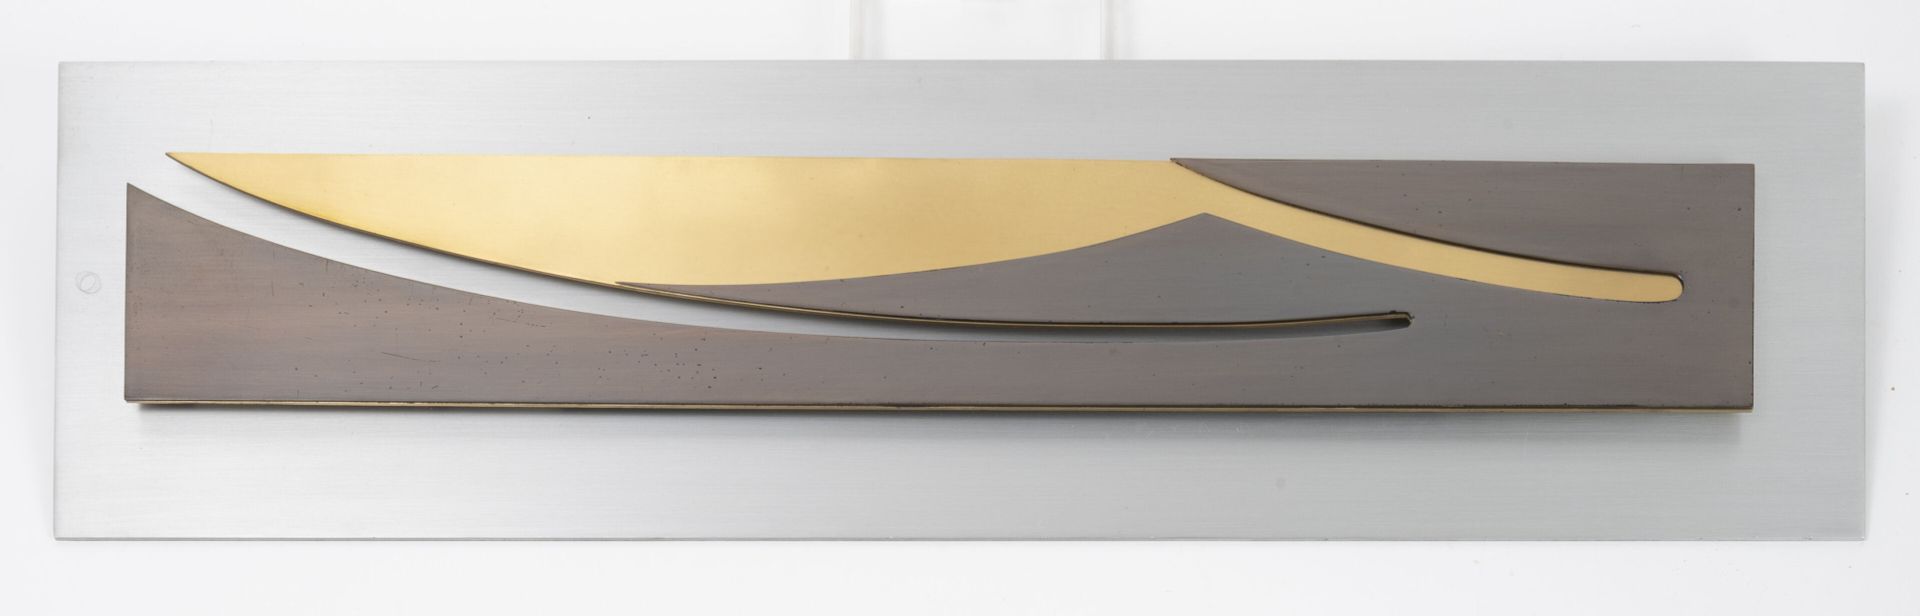 Jean LEGROS (1917-1981) 浮雕，约1970年。
黄铜，镀金黄铜和铝。
无符号。
19,5 x 72 厘米。
小的划痕。